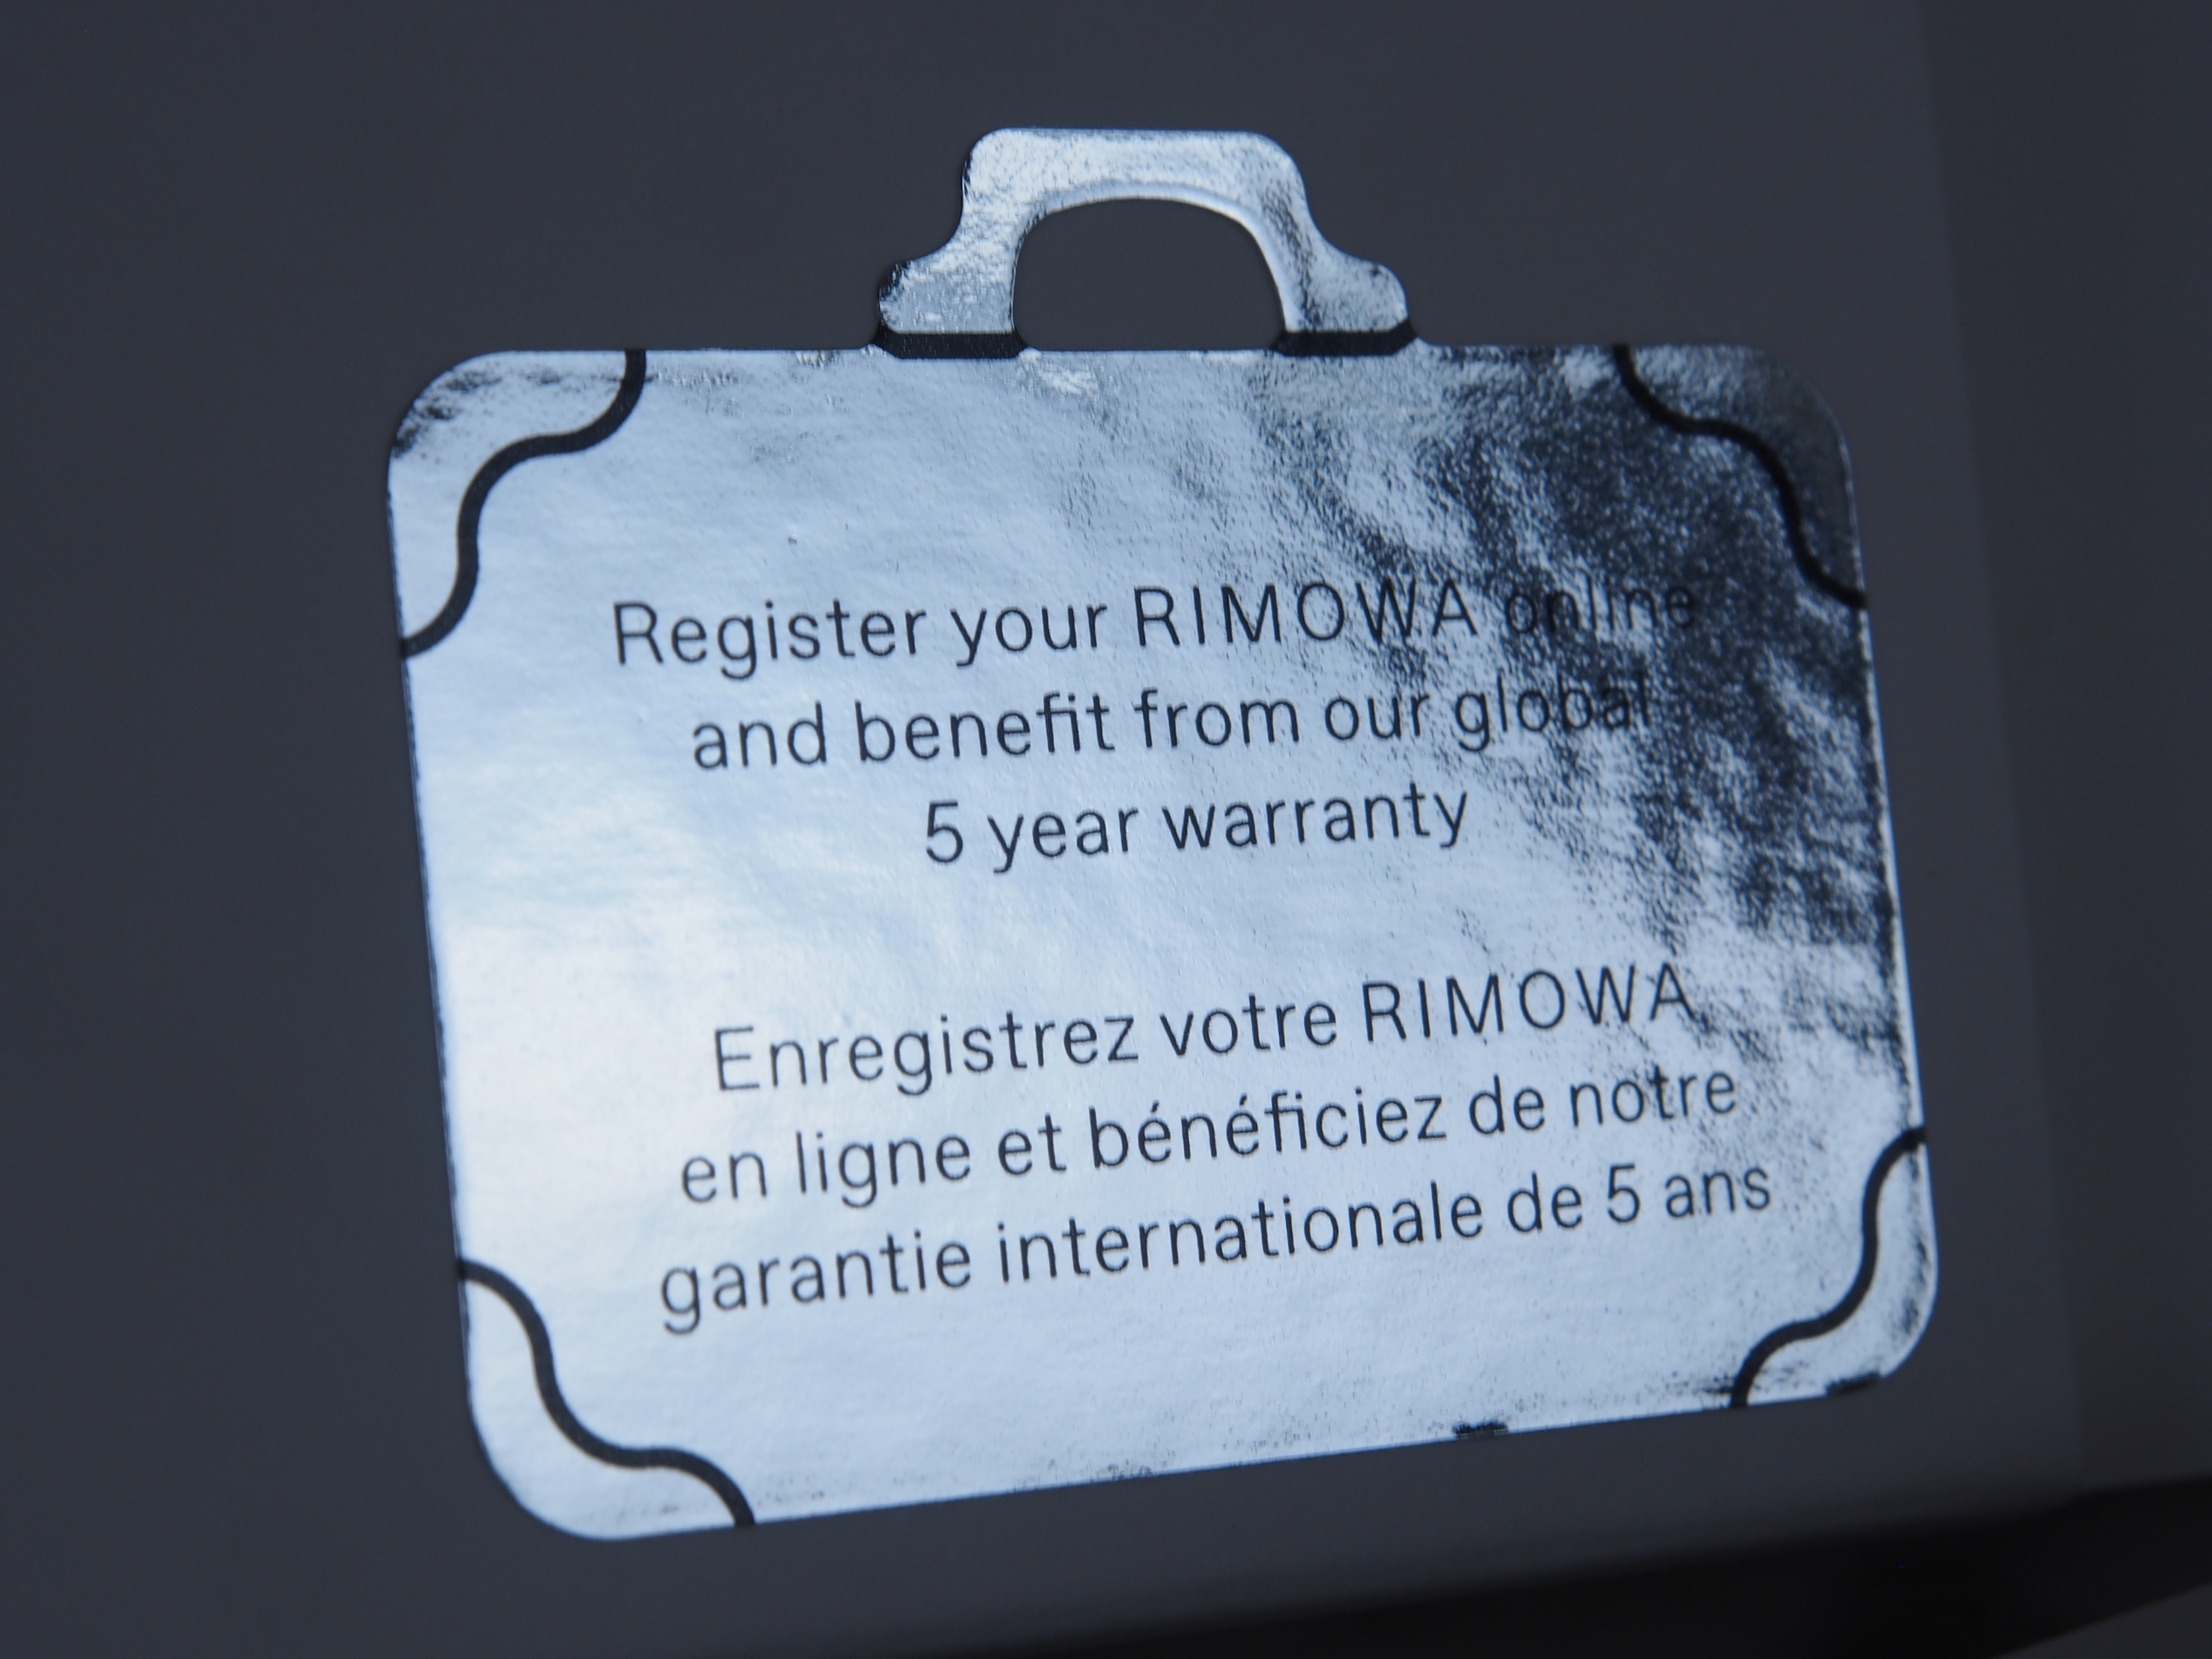 Rimowa and Warranty | Gracefuldegrade